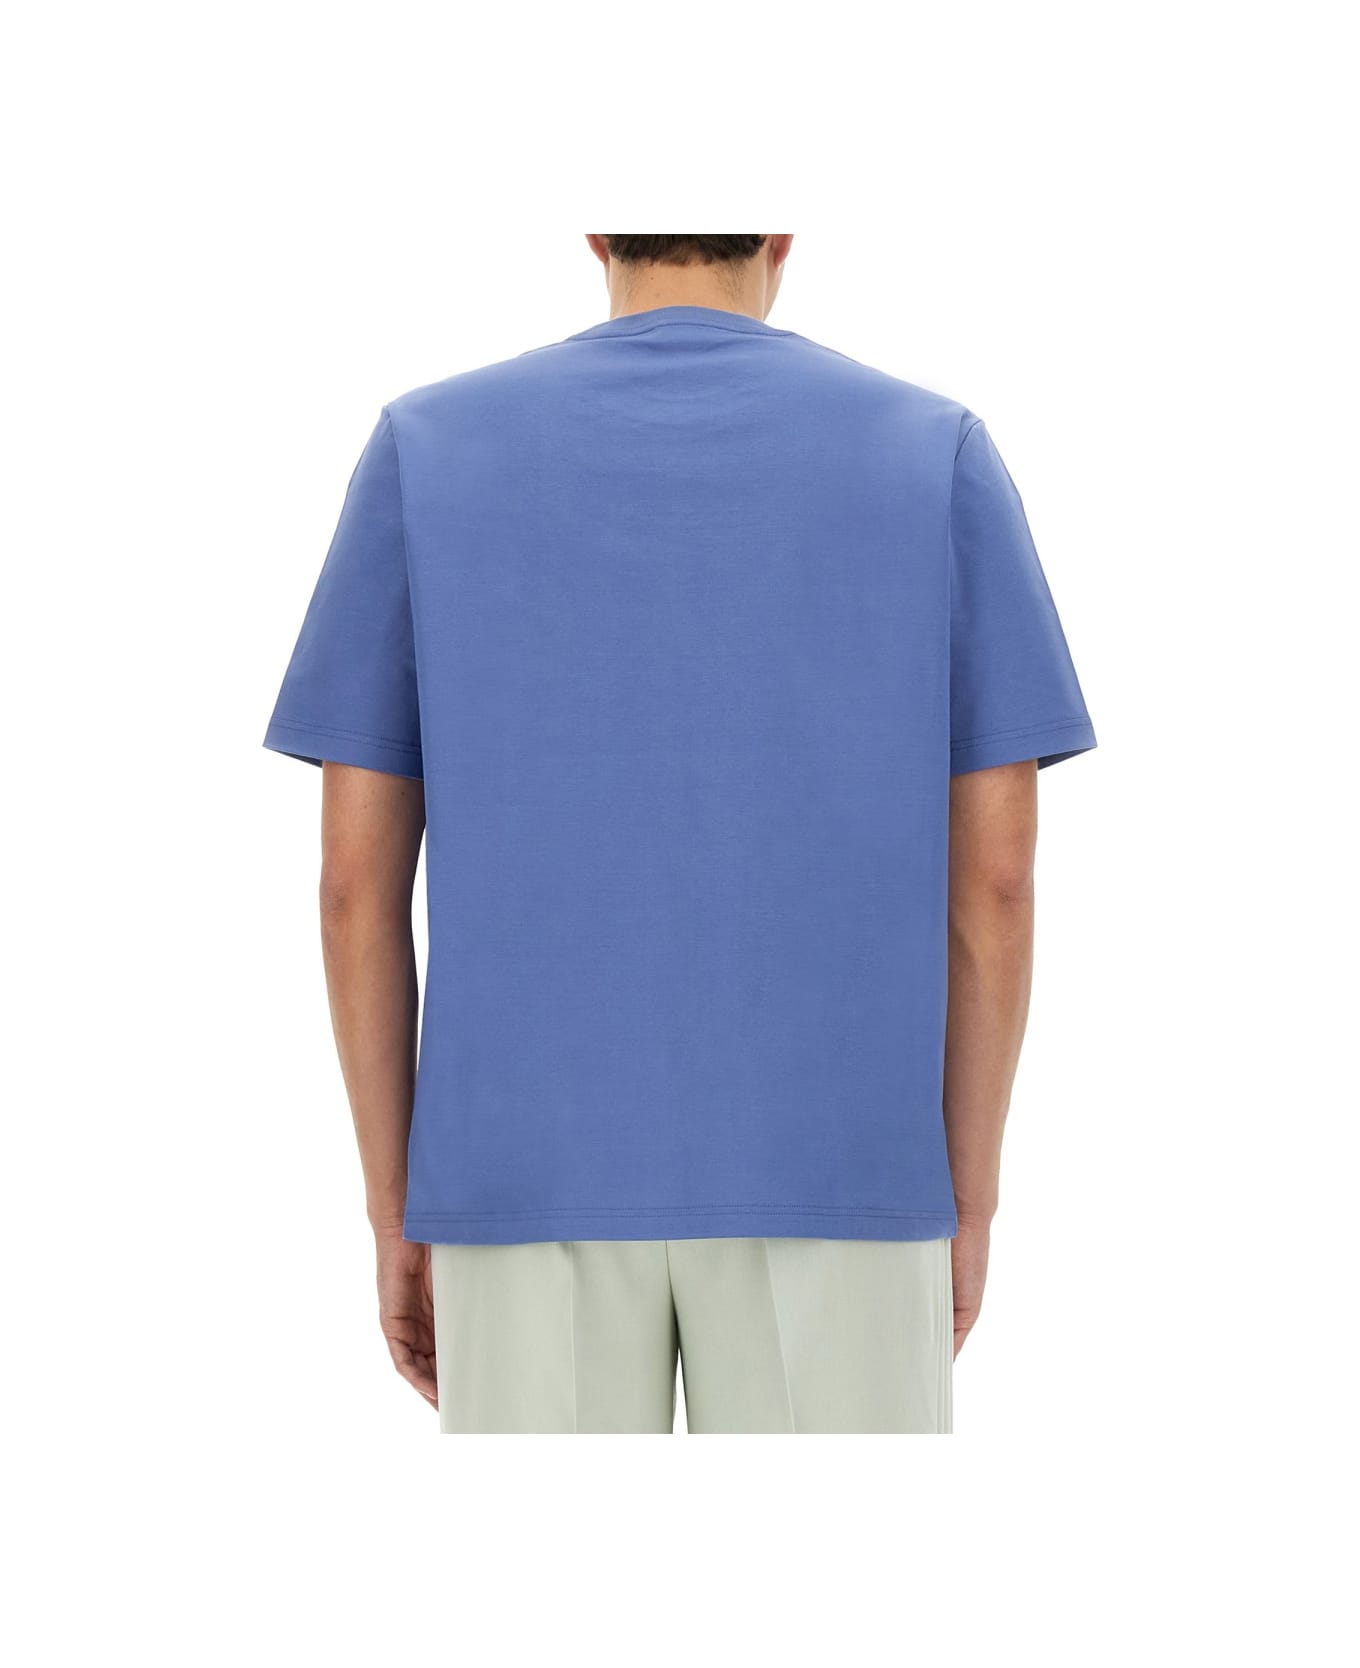 Lanvin Cornflower Embroidered Straight Fit T-shirt - Blue